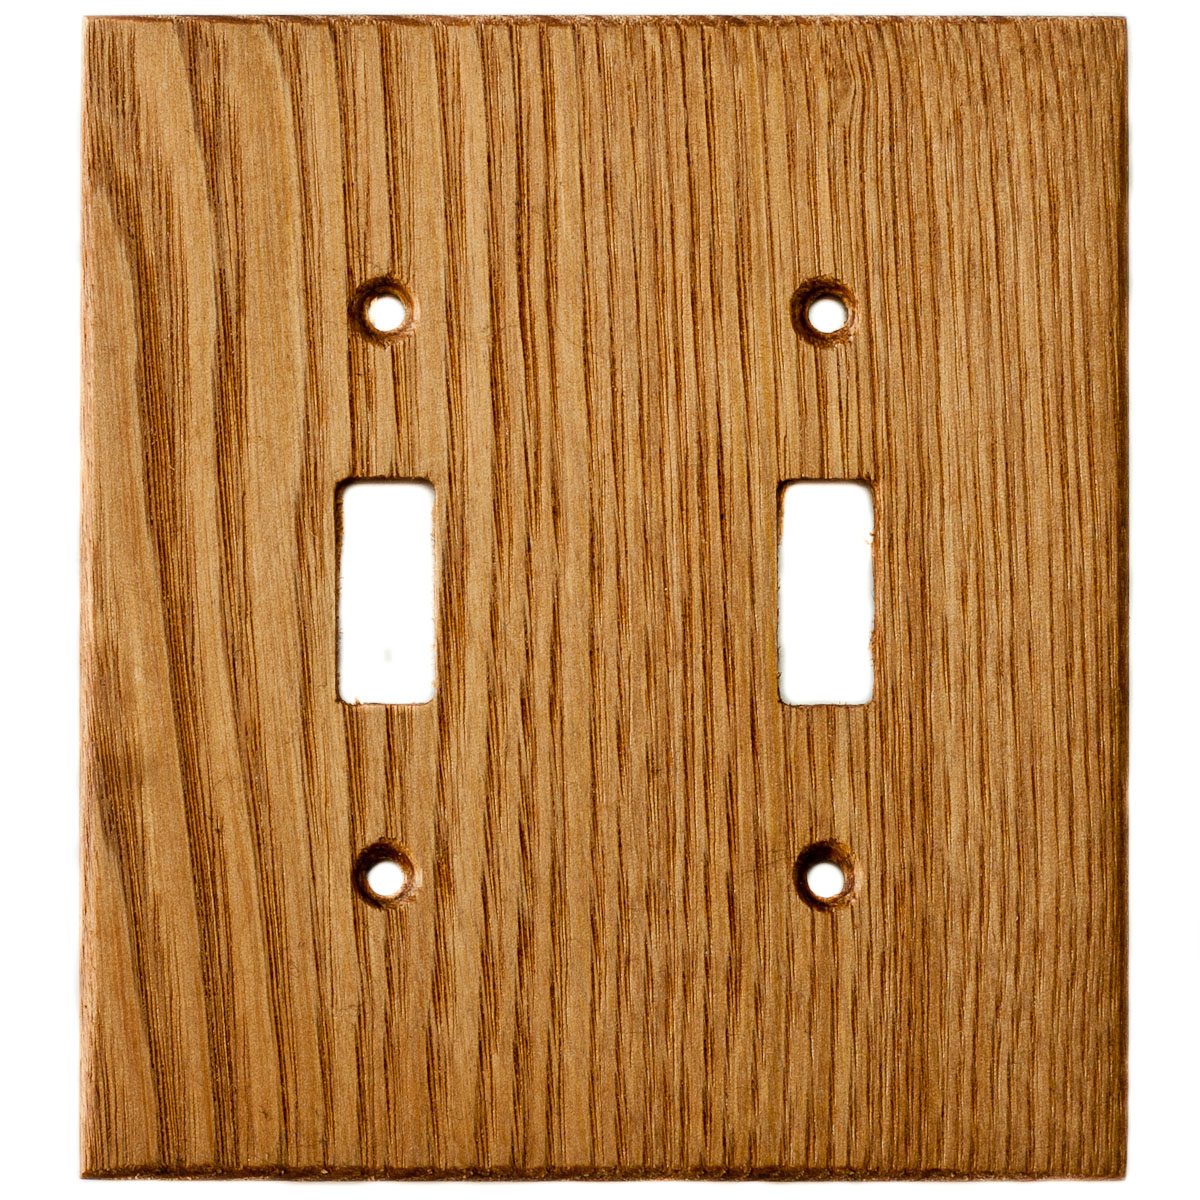 læder TRUE Kredsløb Wormy Chestnut Reclaimed Wood Wall Plate - 2 Gang Light Switch Cover -  Virgin Timber Lumber